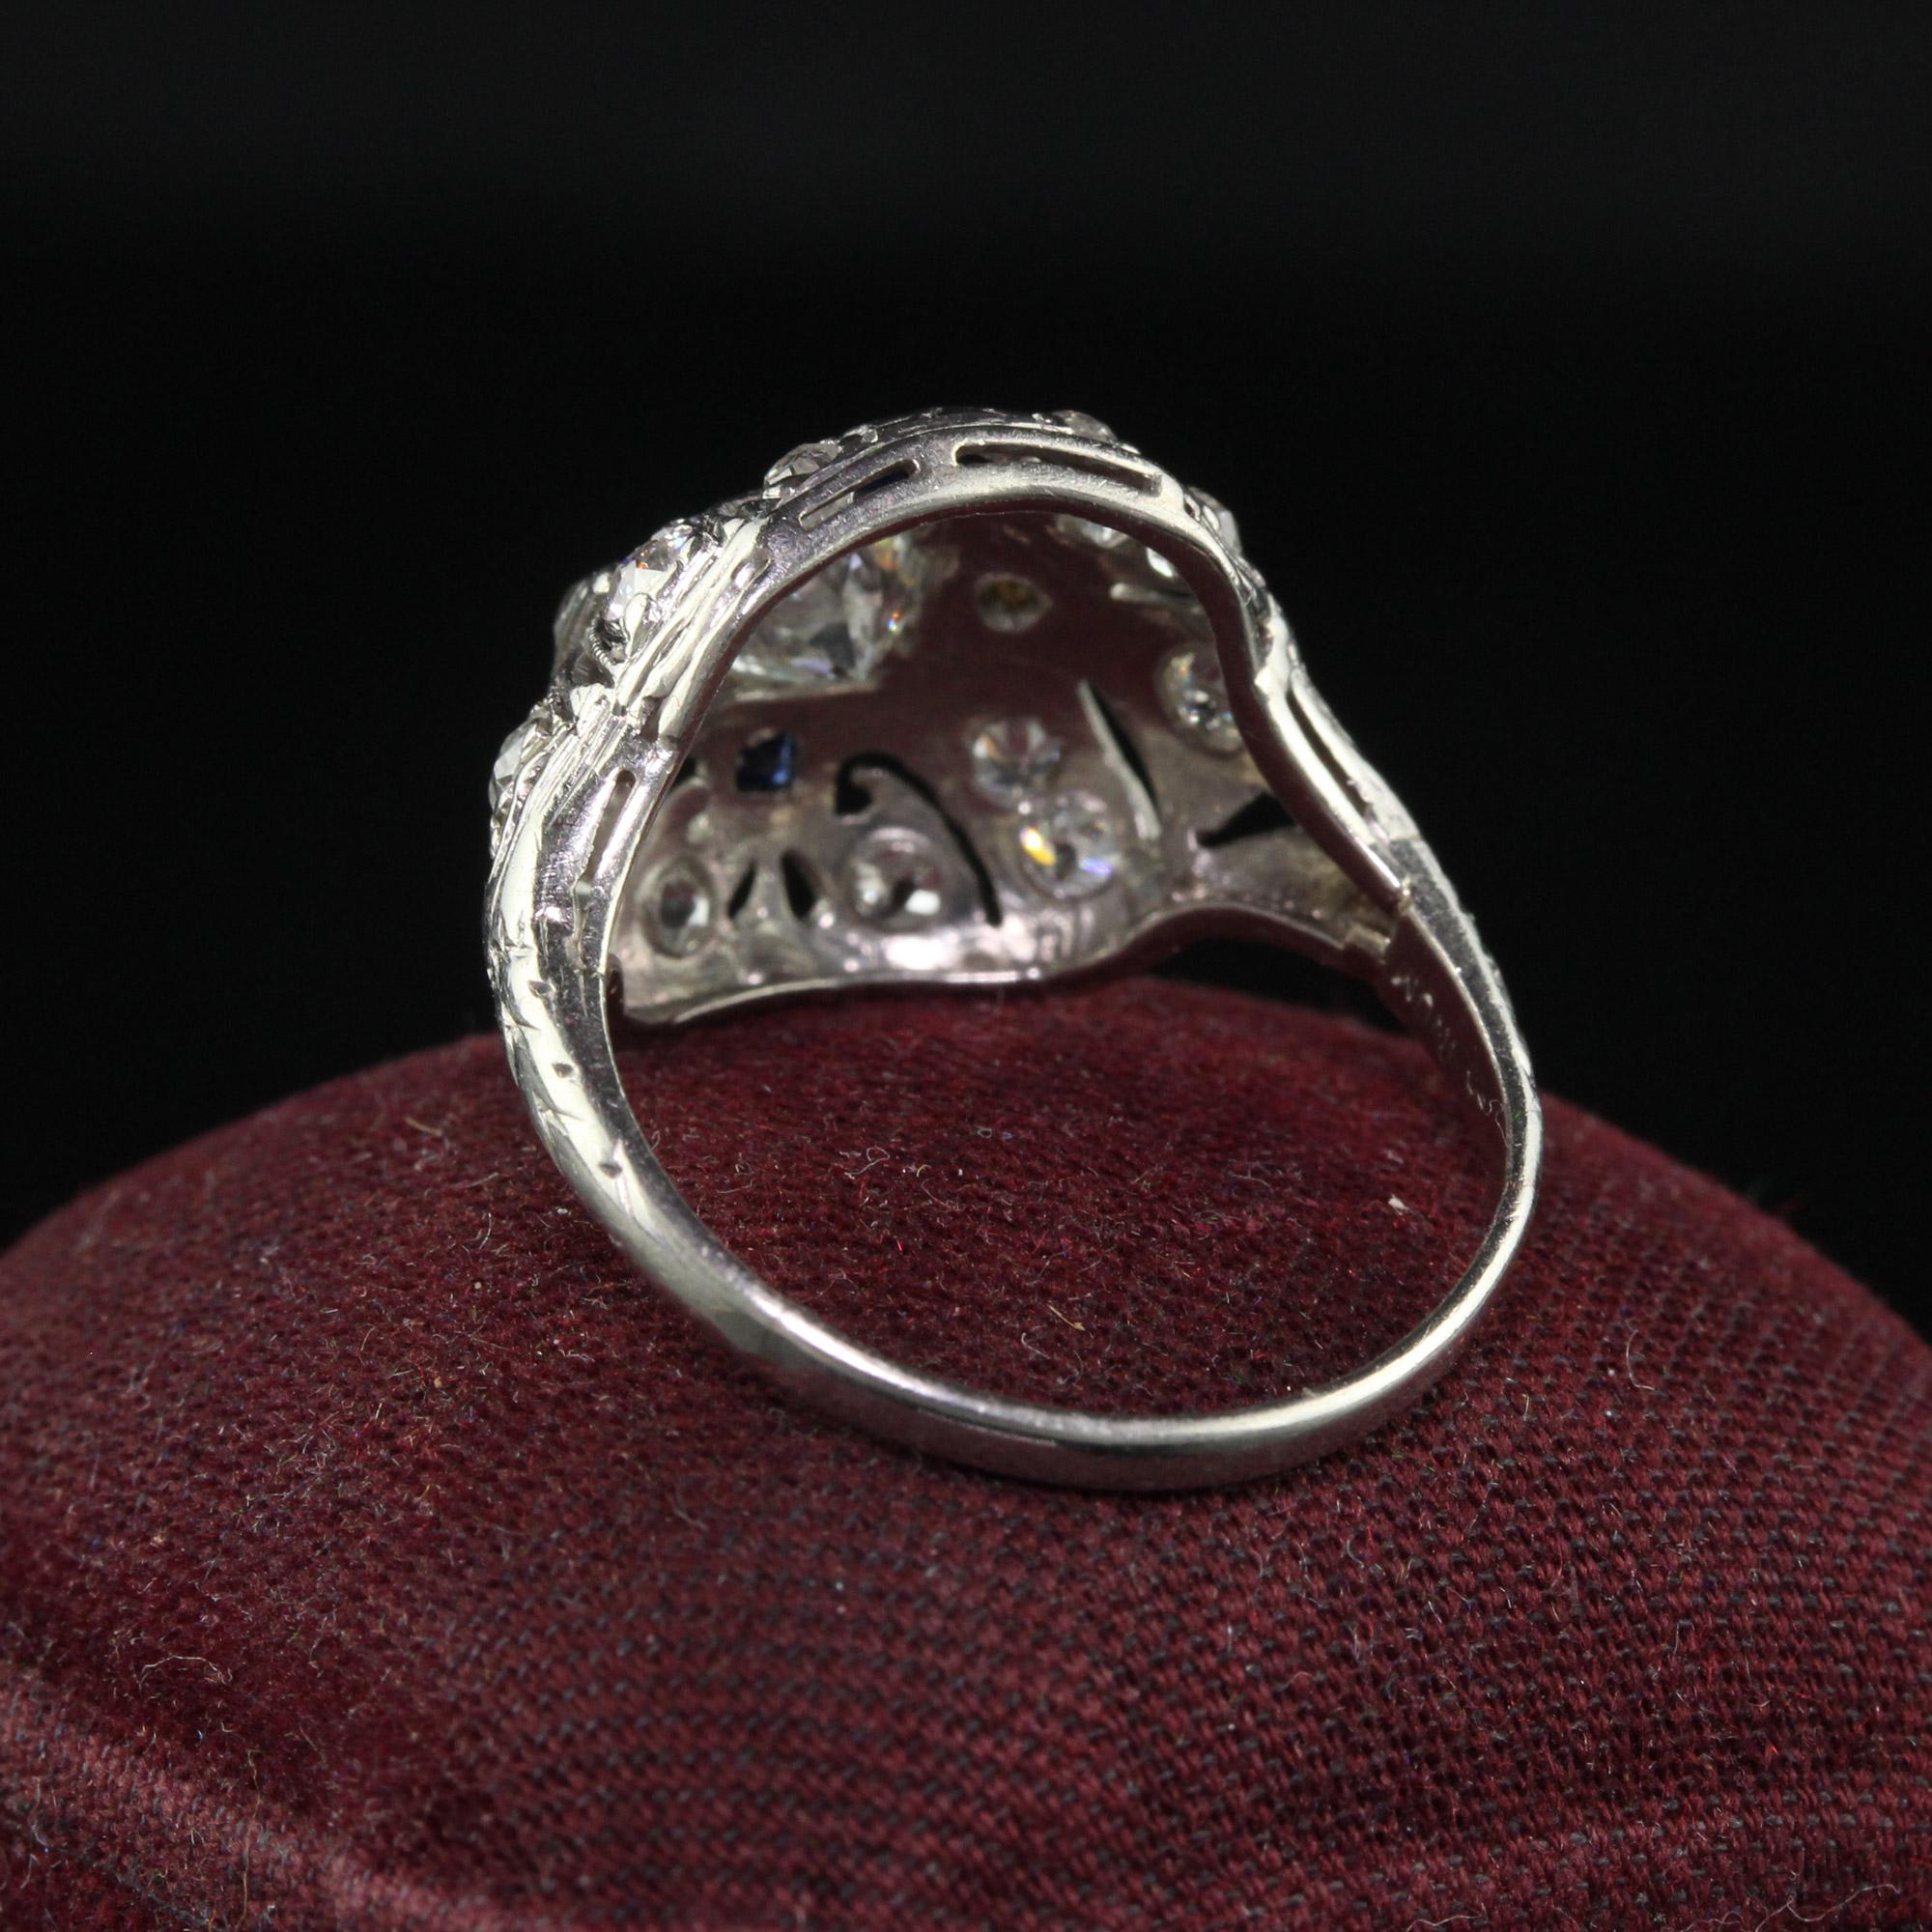 Women's Antique Art Deco Platinum Old European Cut Diamond and Sapphire Cocktail Ring For Sale